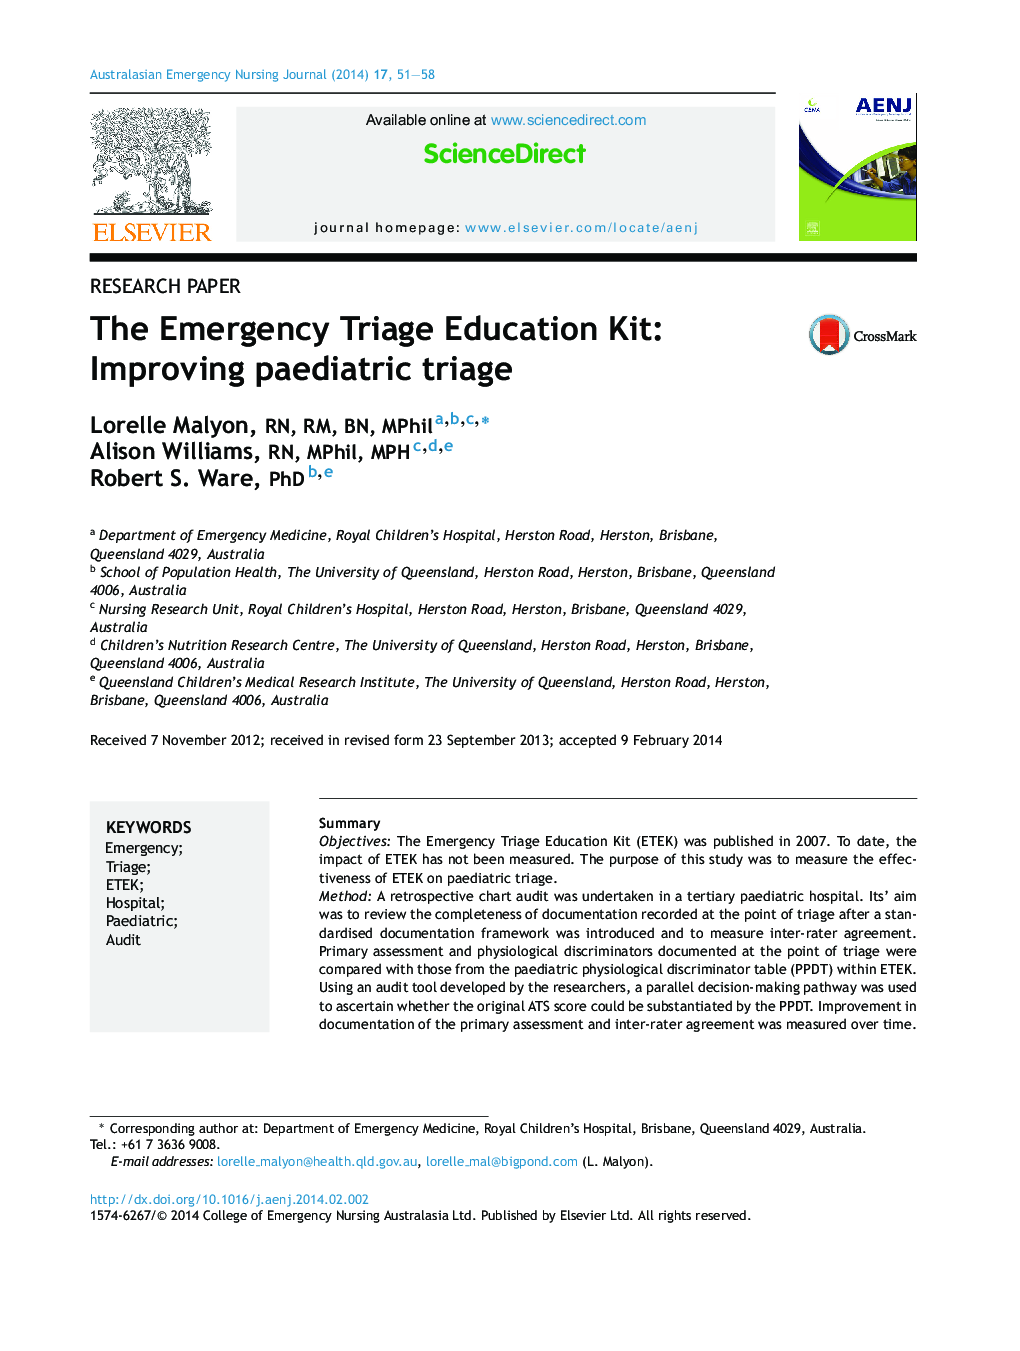 The Emergency Triage Education Kit: Improving paediatric triage